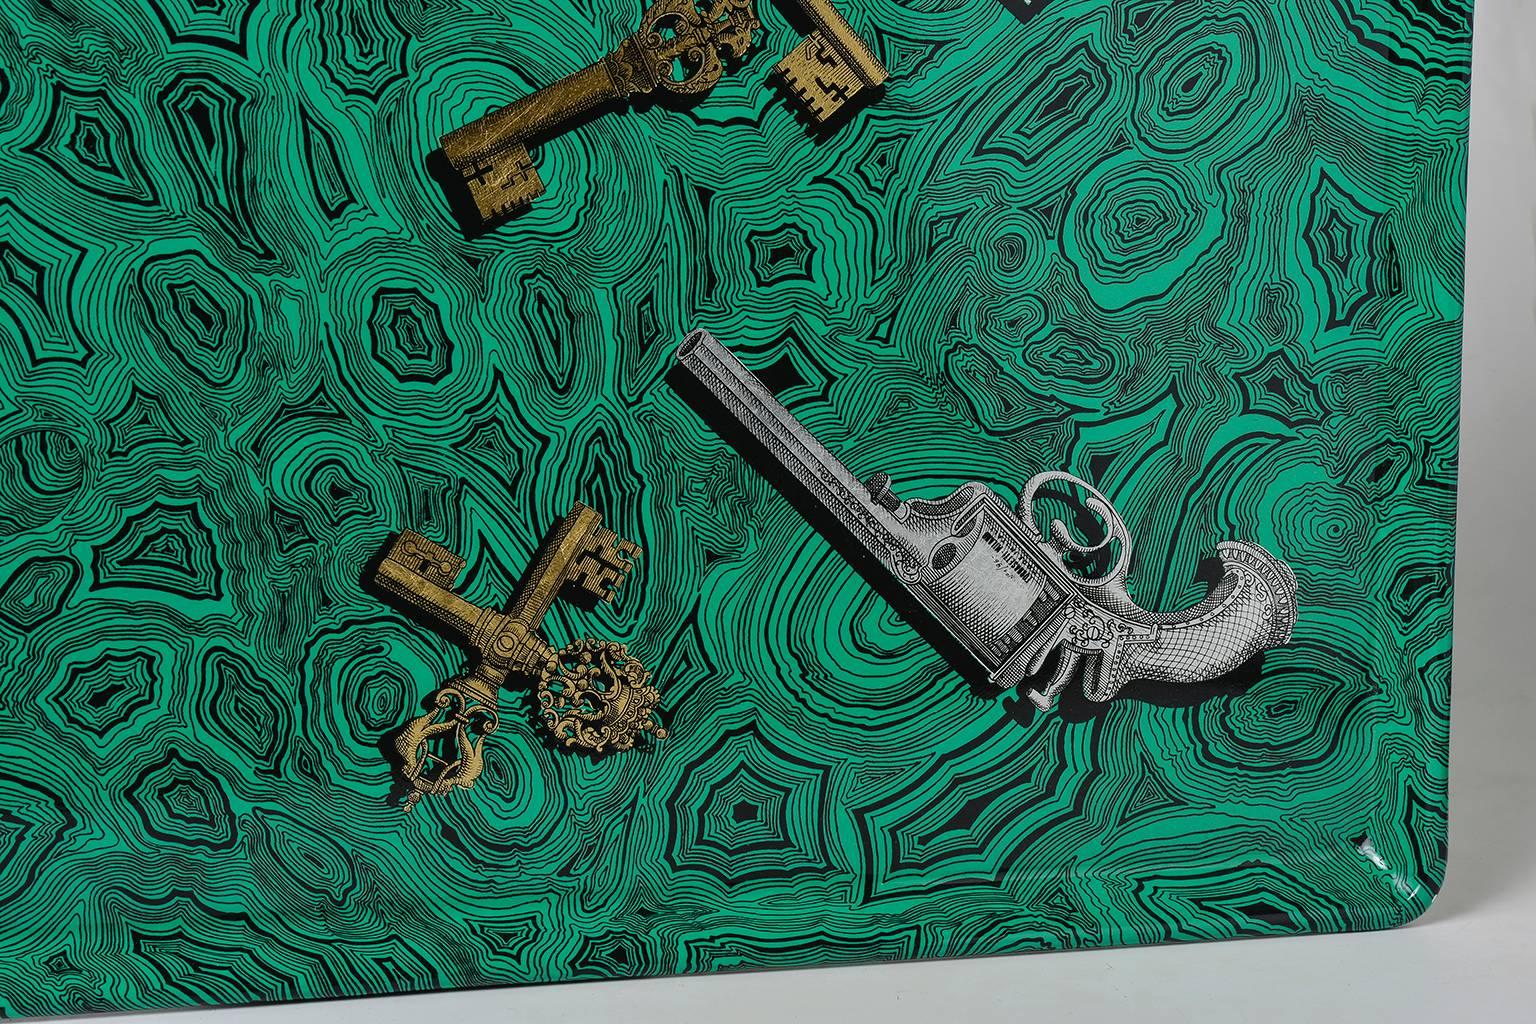  Piero Fornasetti vintage smart tray, faux malachite with guns and keys, very elegant -
O/2438 -